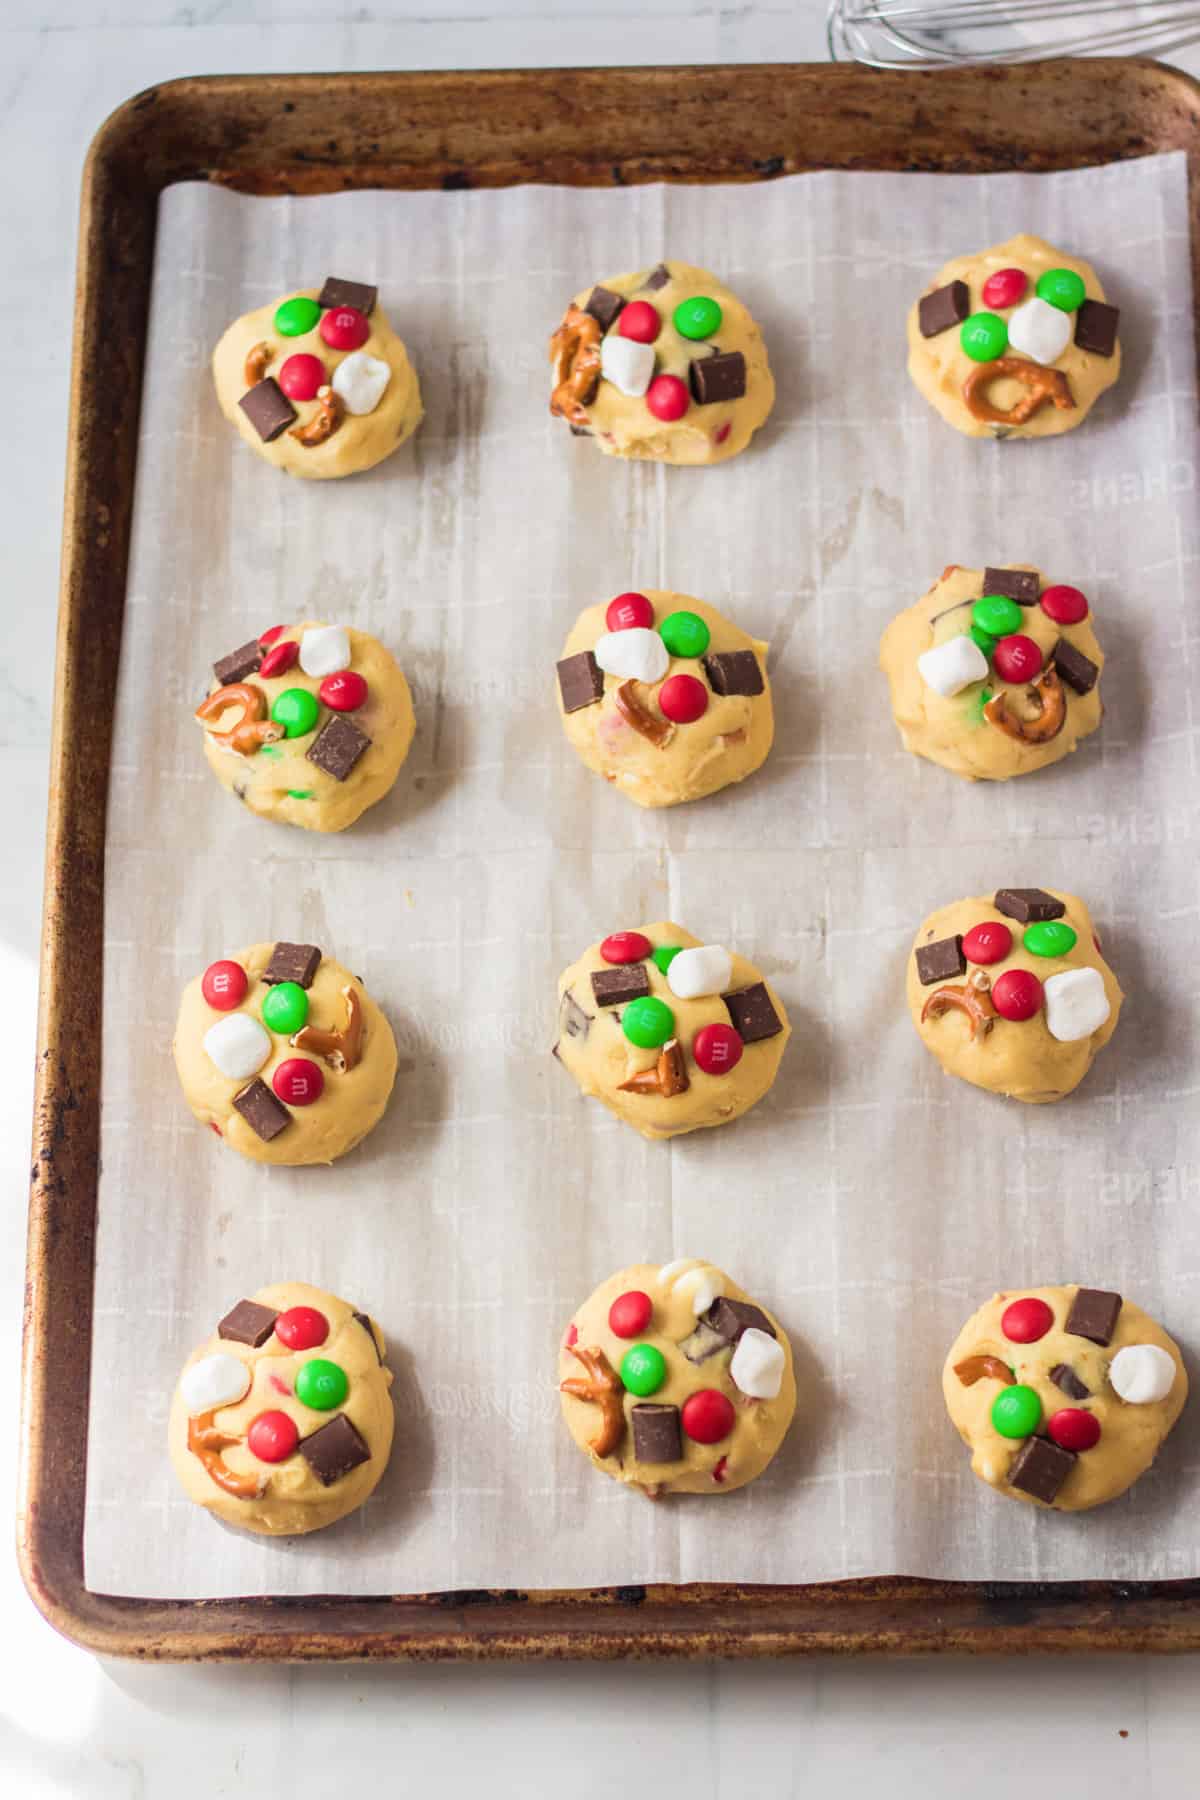 12 cookie dough balls on lined baking sheet.